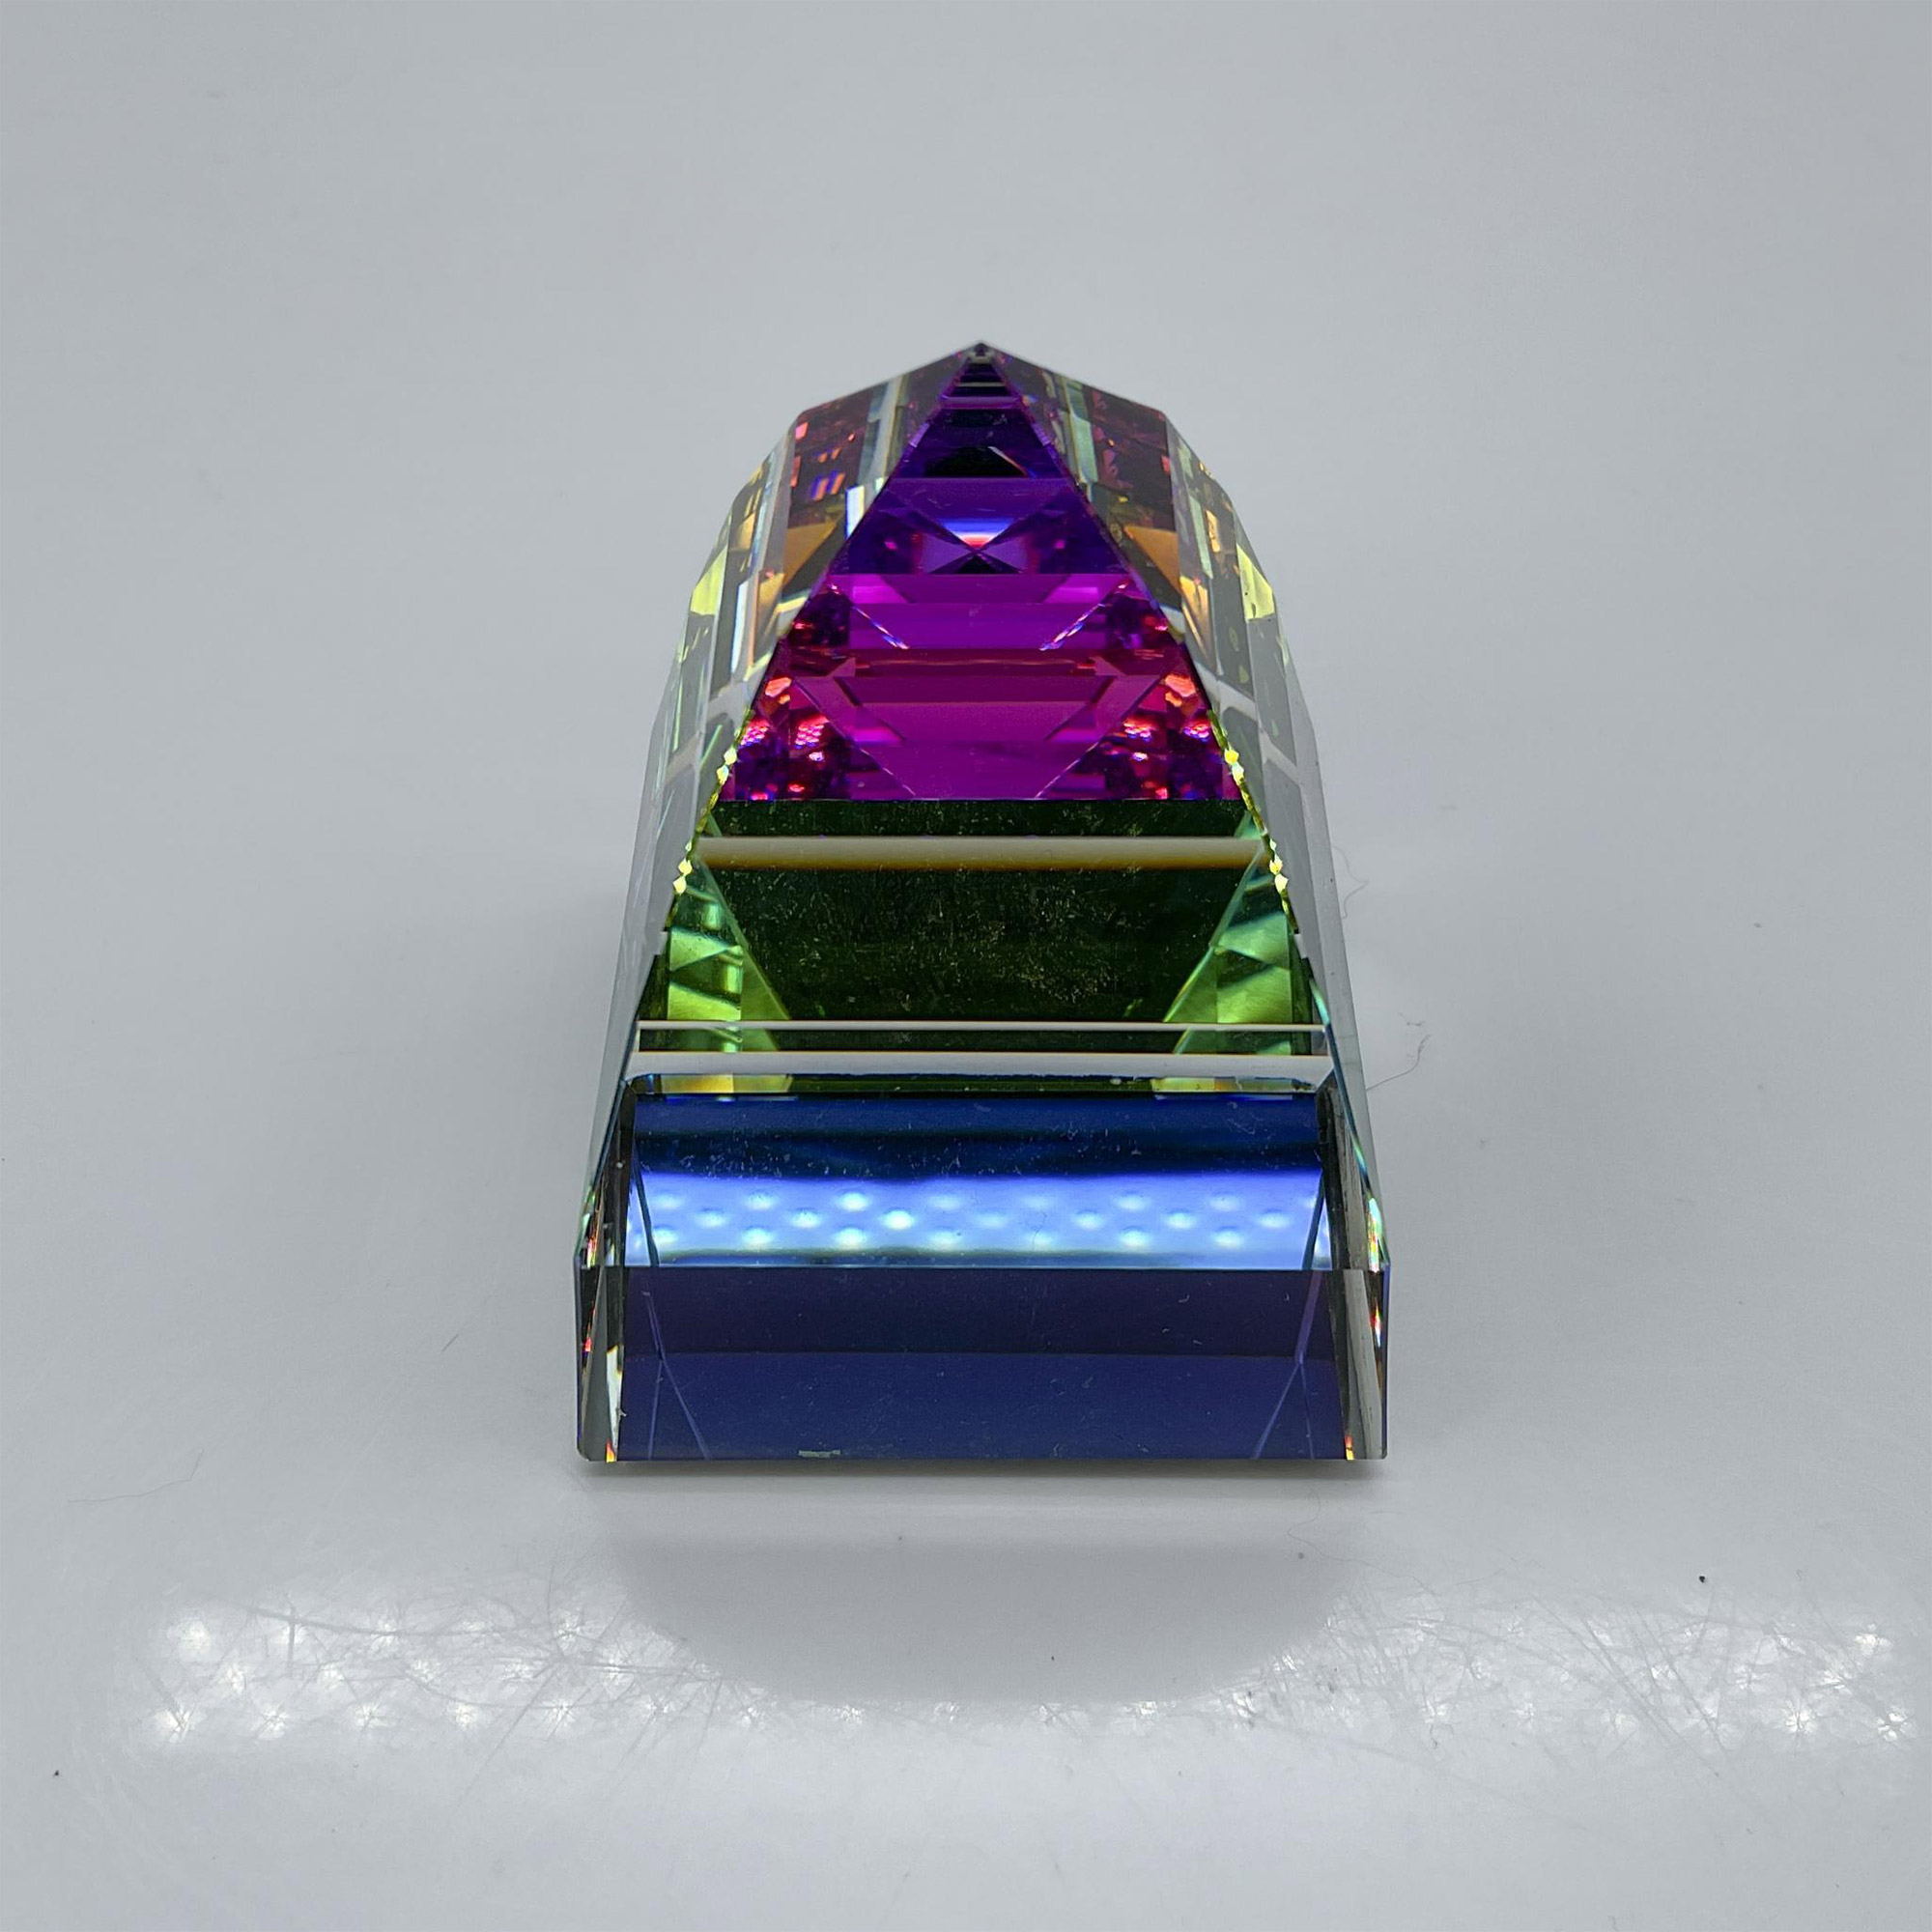 Swarovski Silver Crystal Paperweight, Pyramid Rainbow - Image 2 of 4